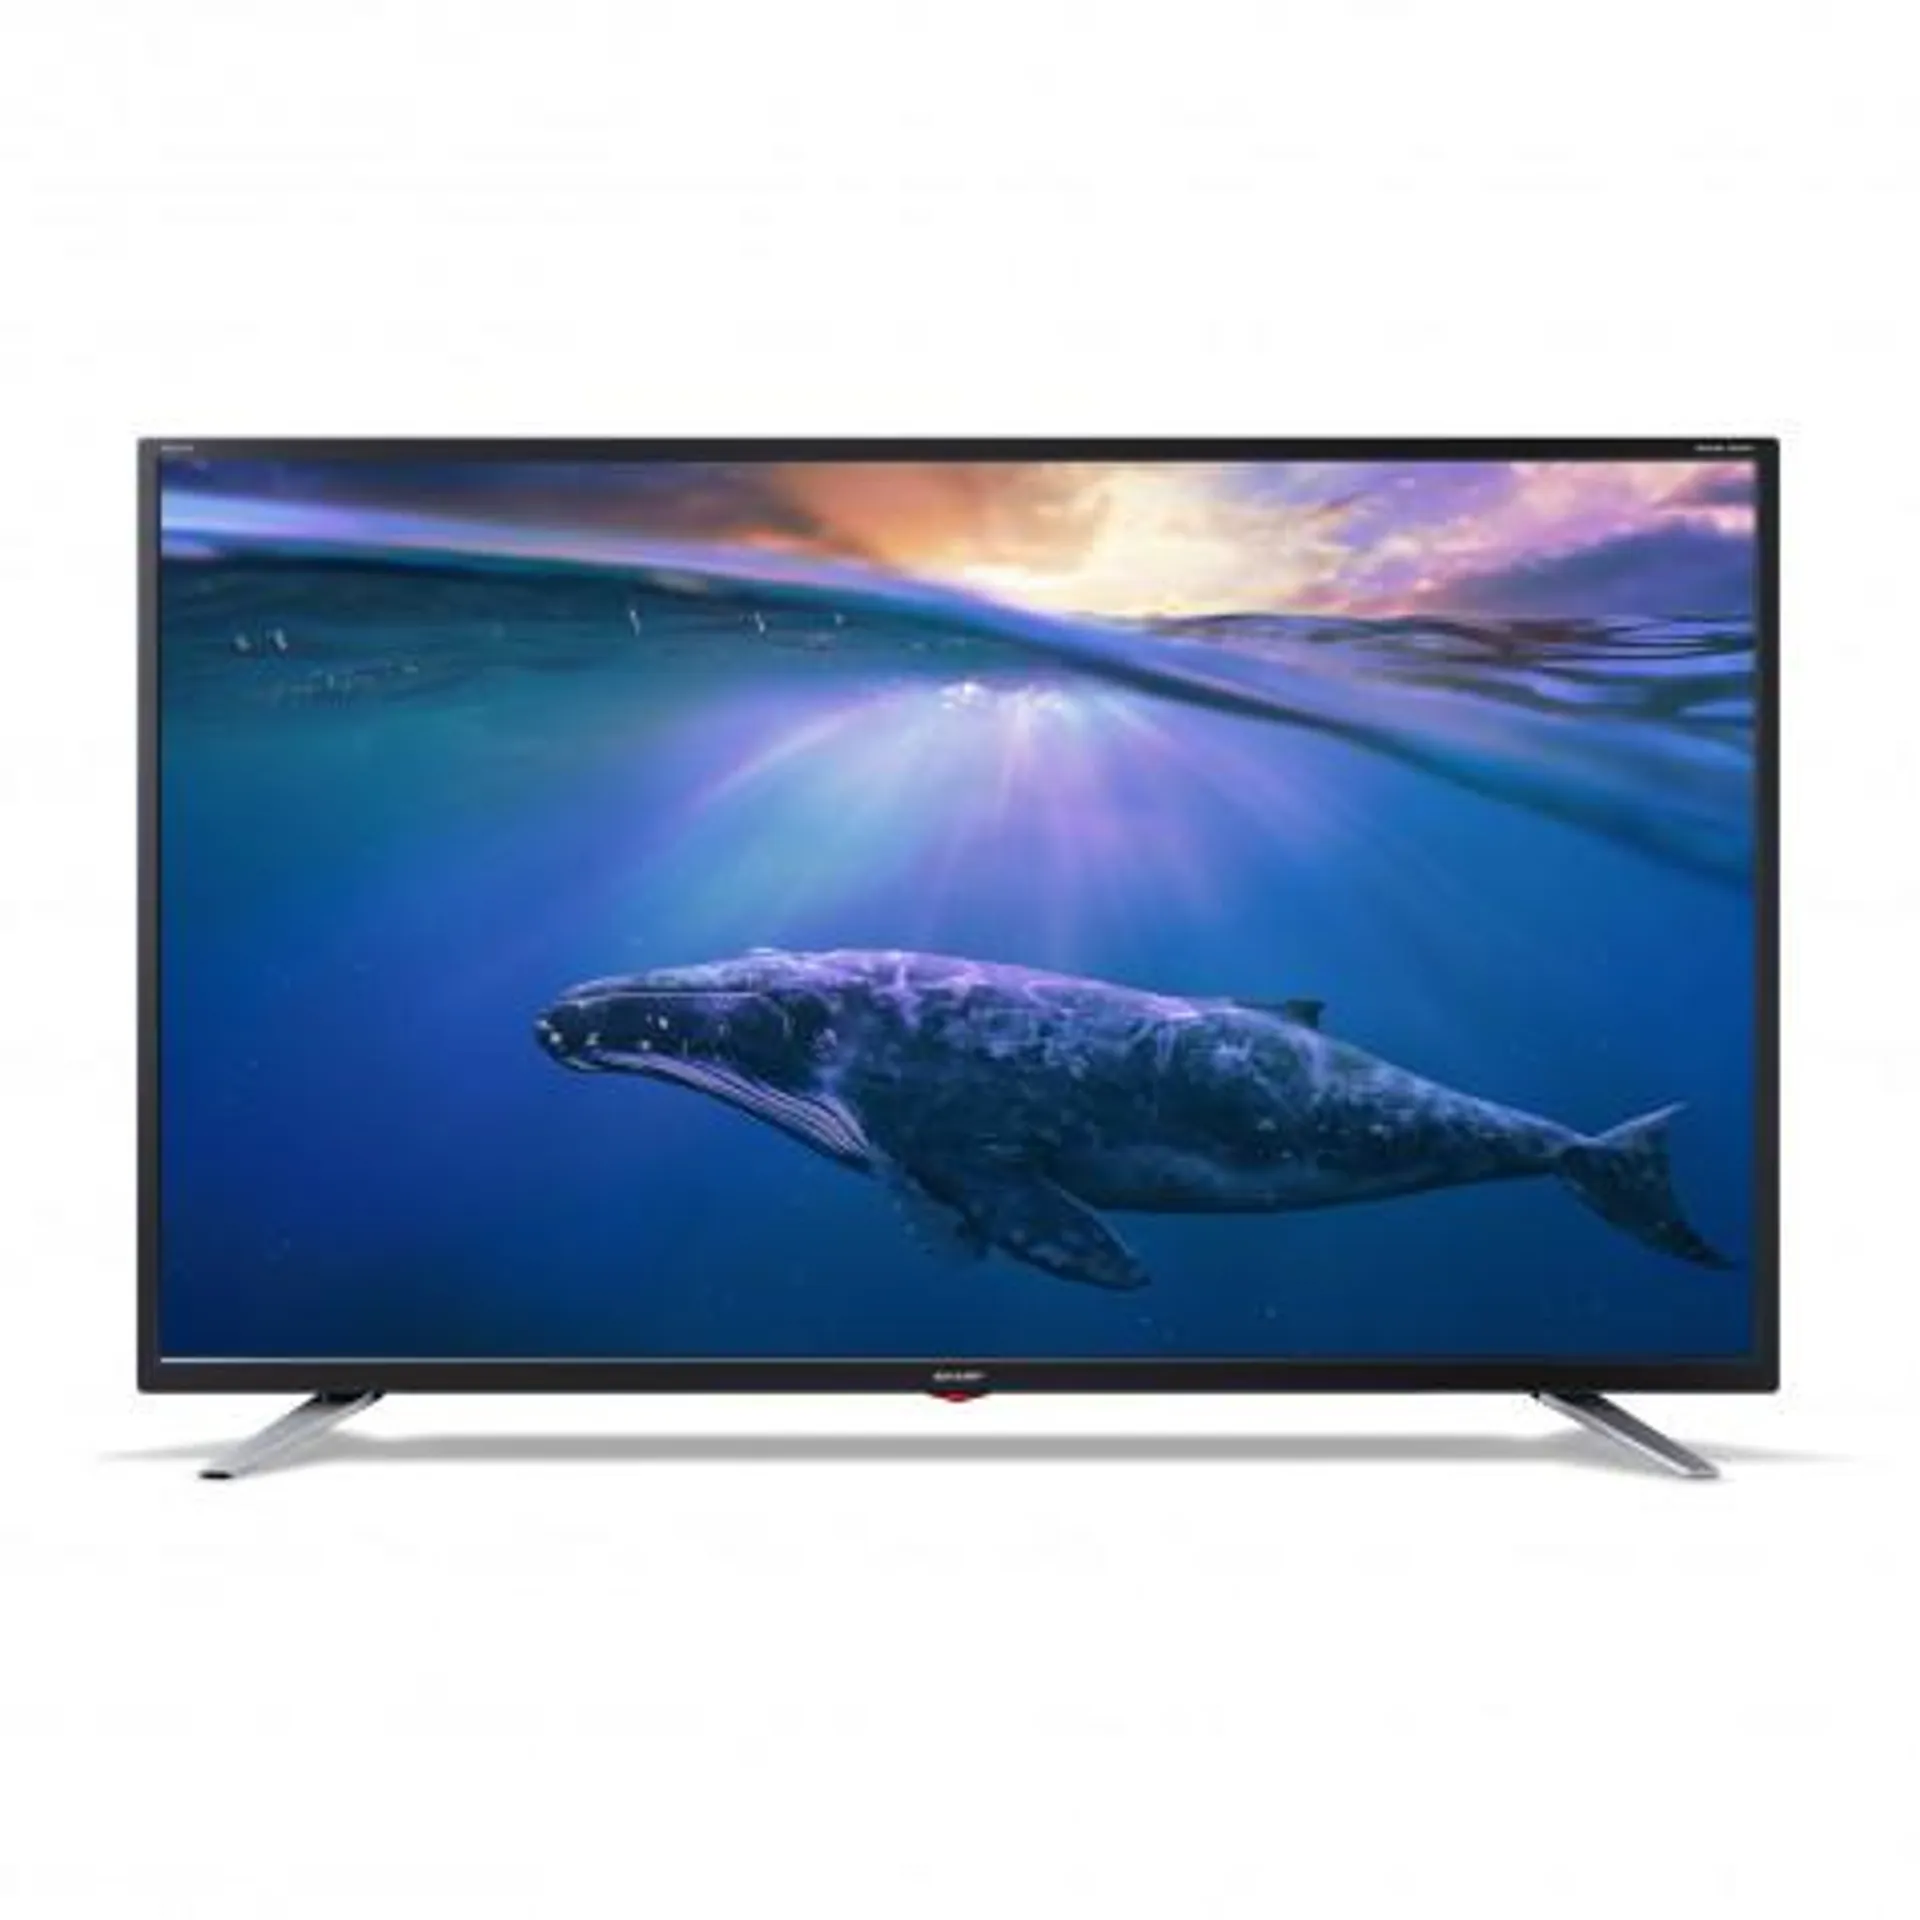 Sharp 42CG3E Full HD Smart TV 42" (106 cm)